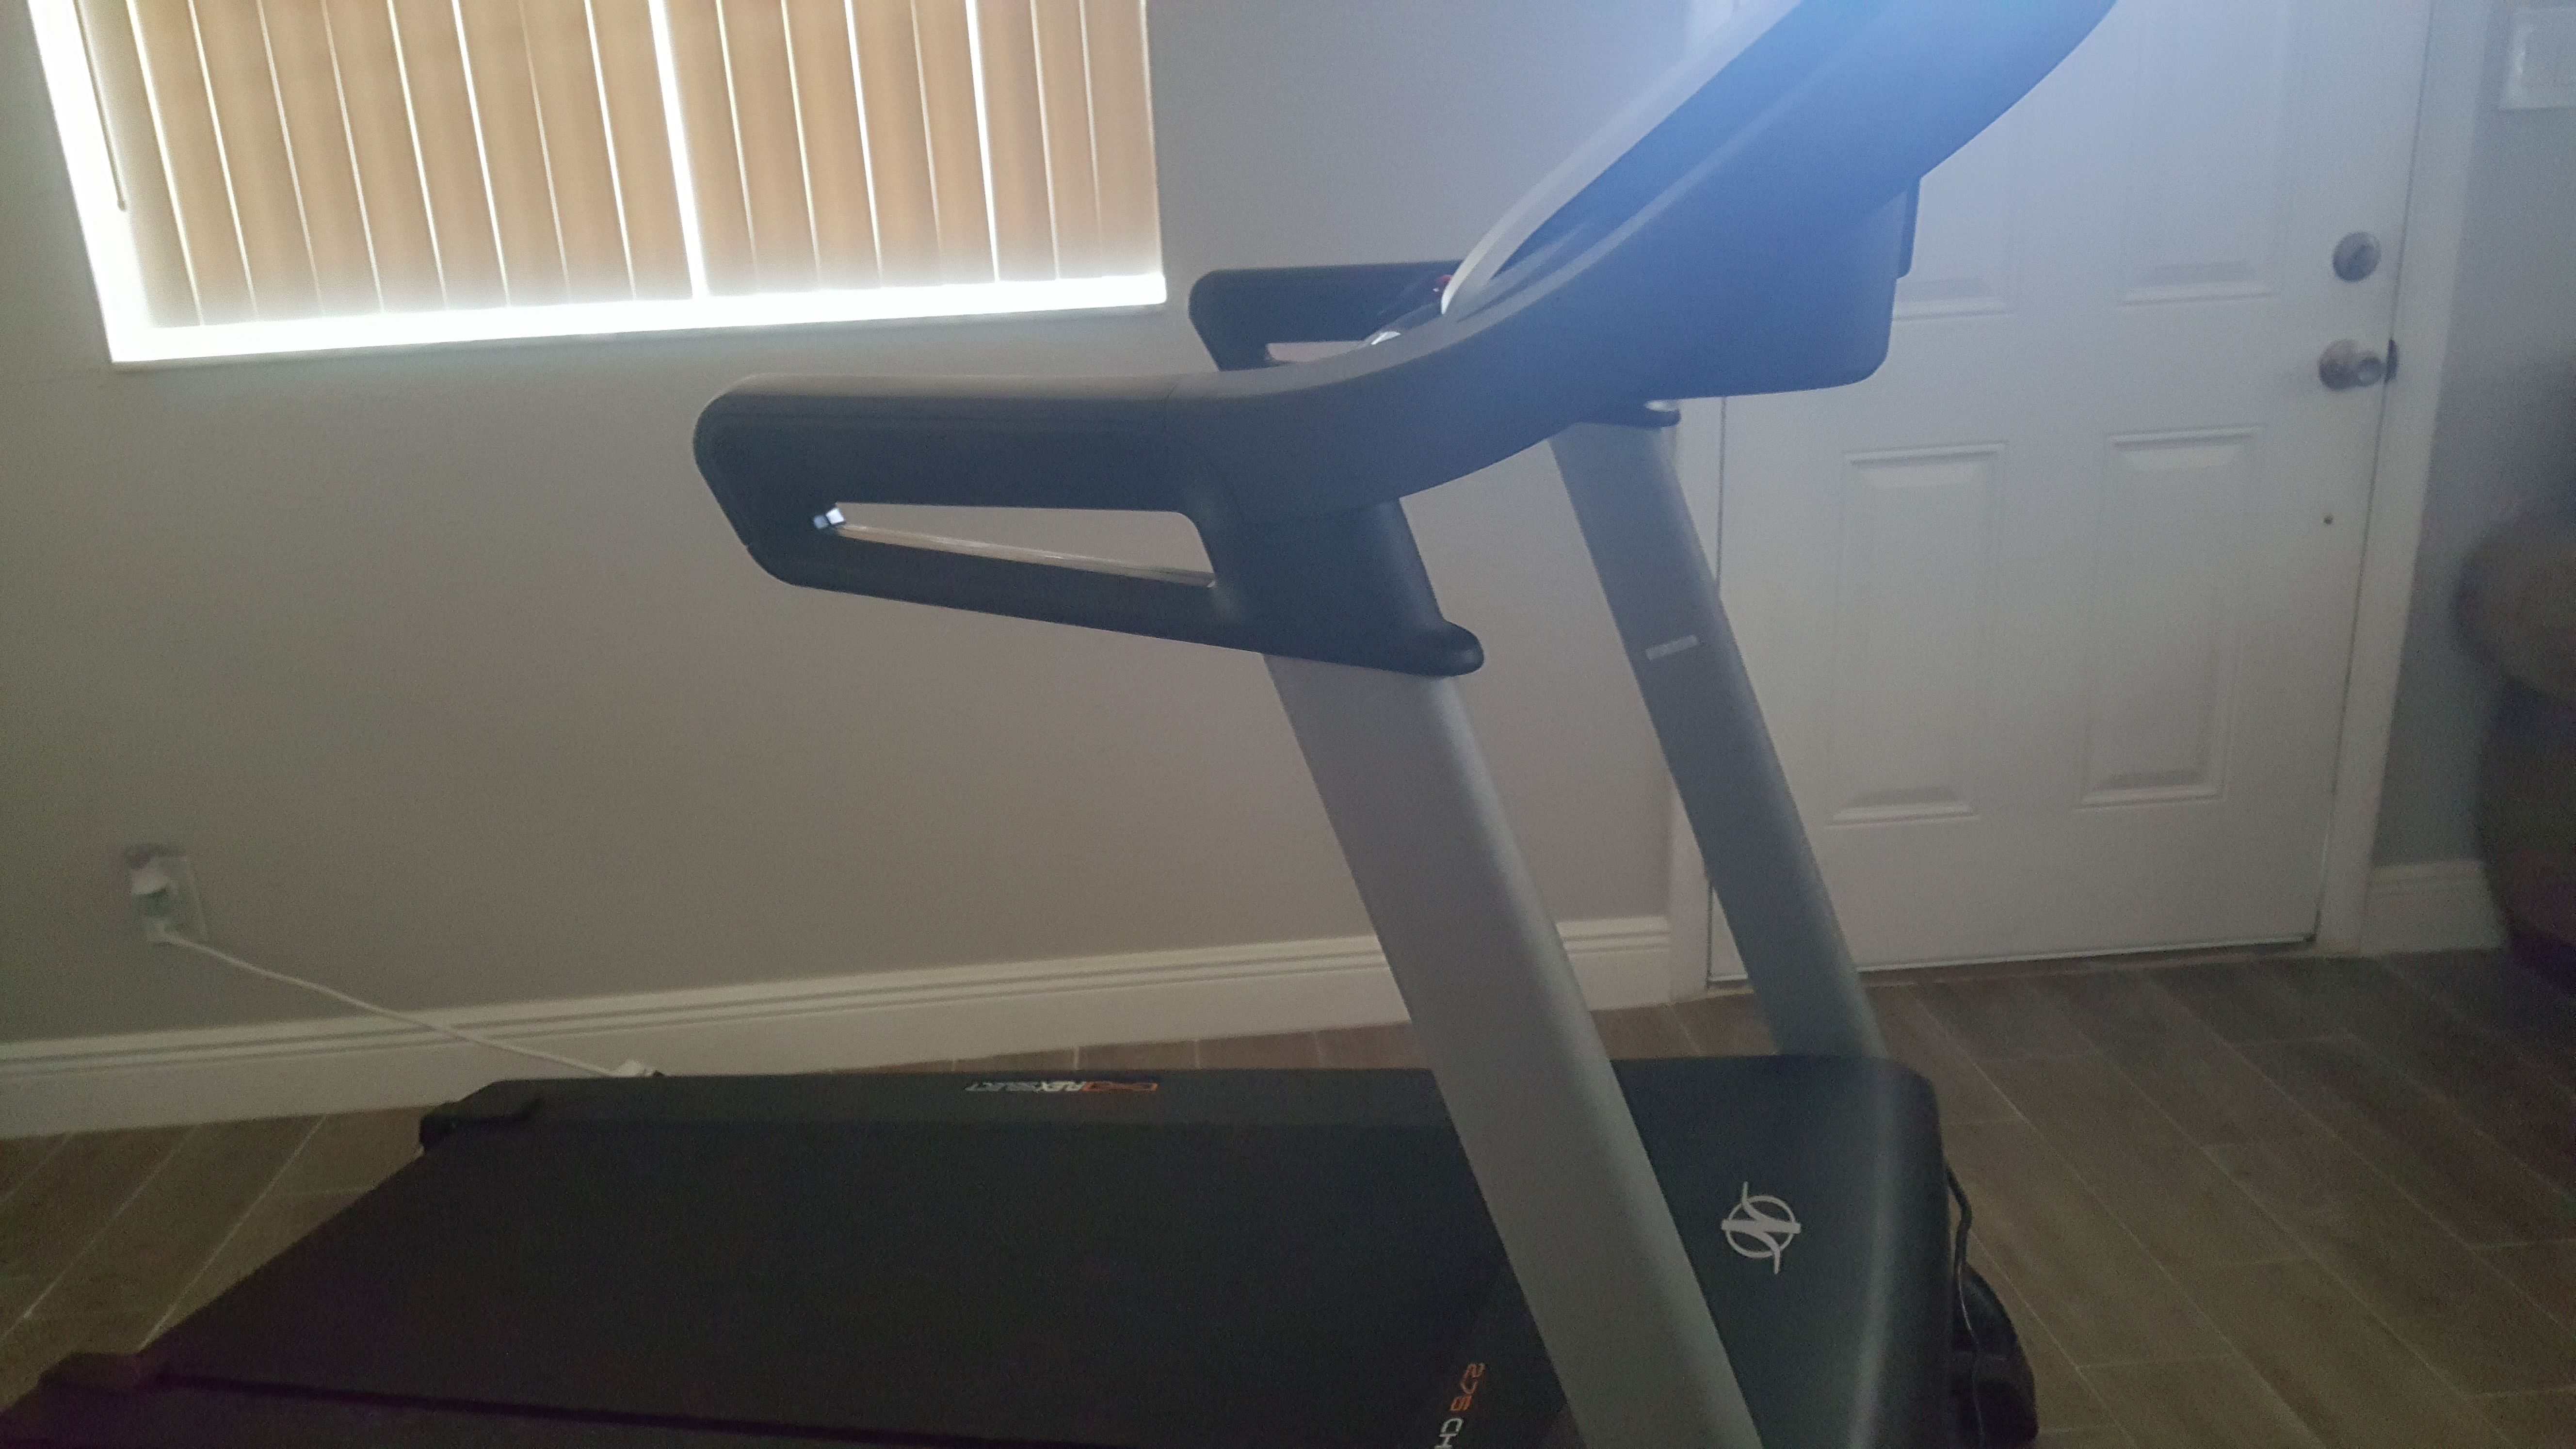 C700 Nordictrack treadmill